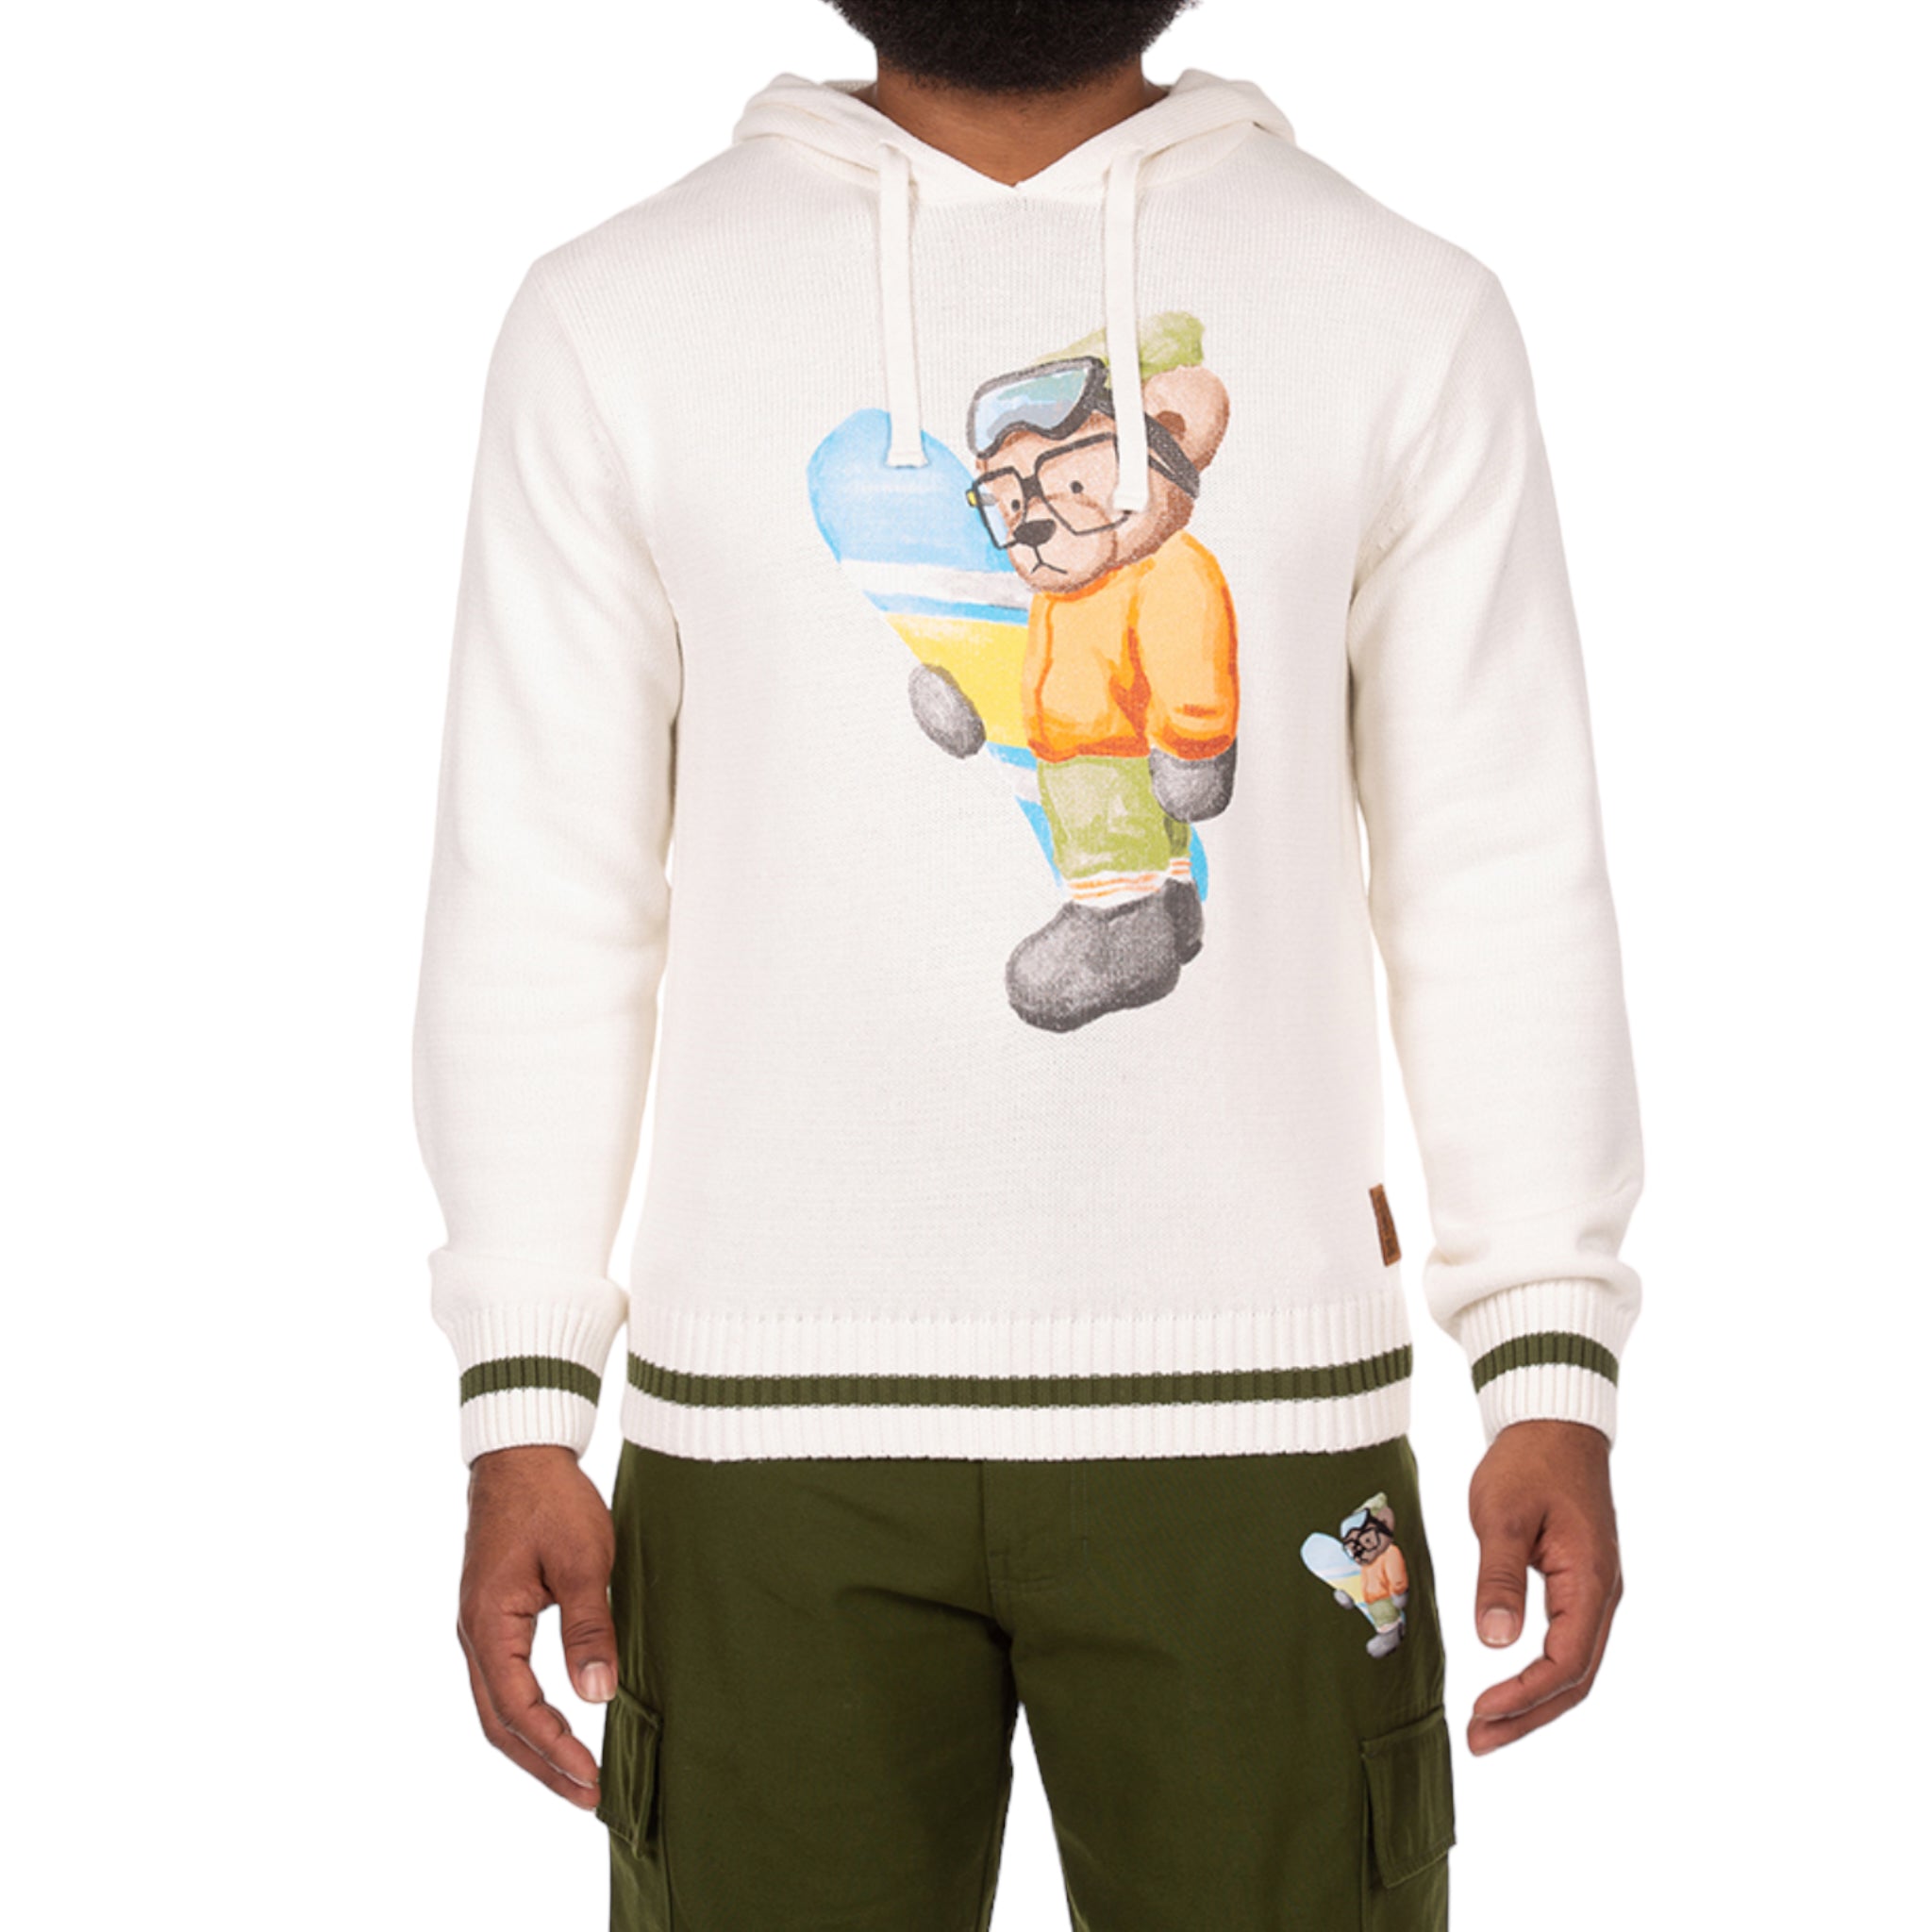 HUSTLE GANG: All Mountain Sweater 231-8501